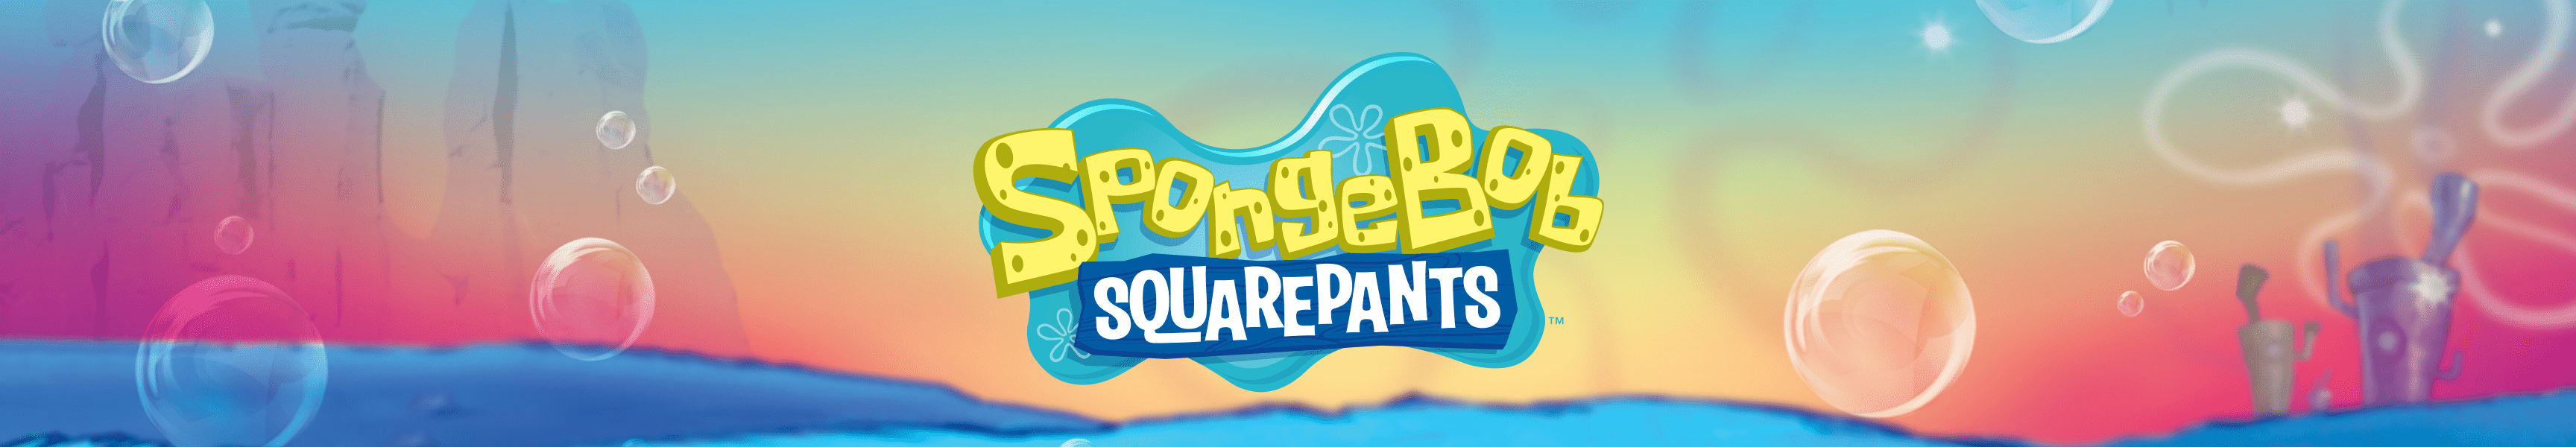 SpongeBob SquarePants Feelin' Moody